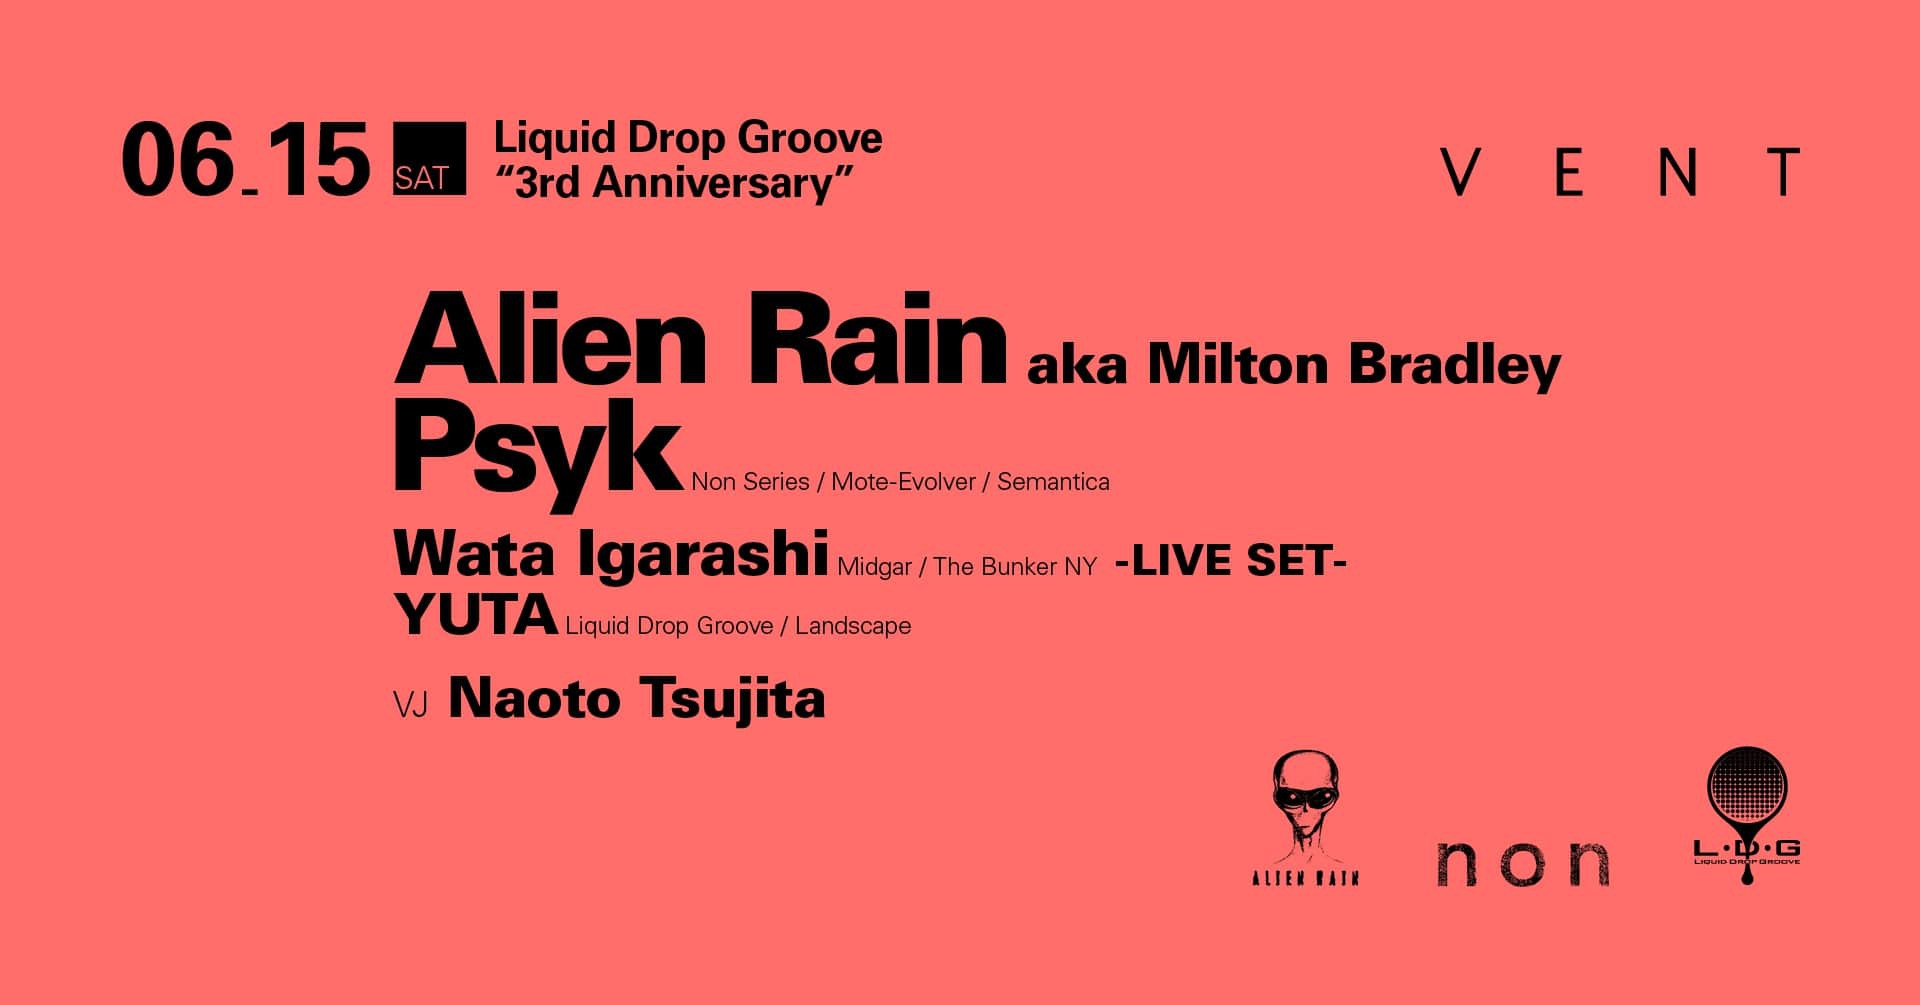 Alien Rain and Psyk at Liquid Drop Groove “3rd Anniversary” June 15 (SAT) at VENT Omotesando